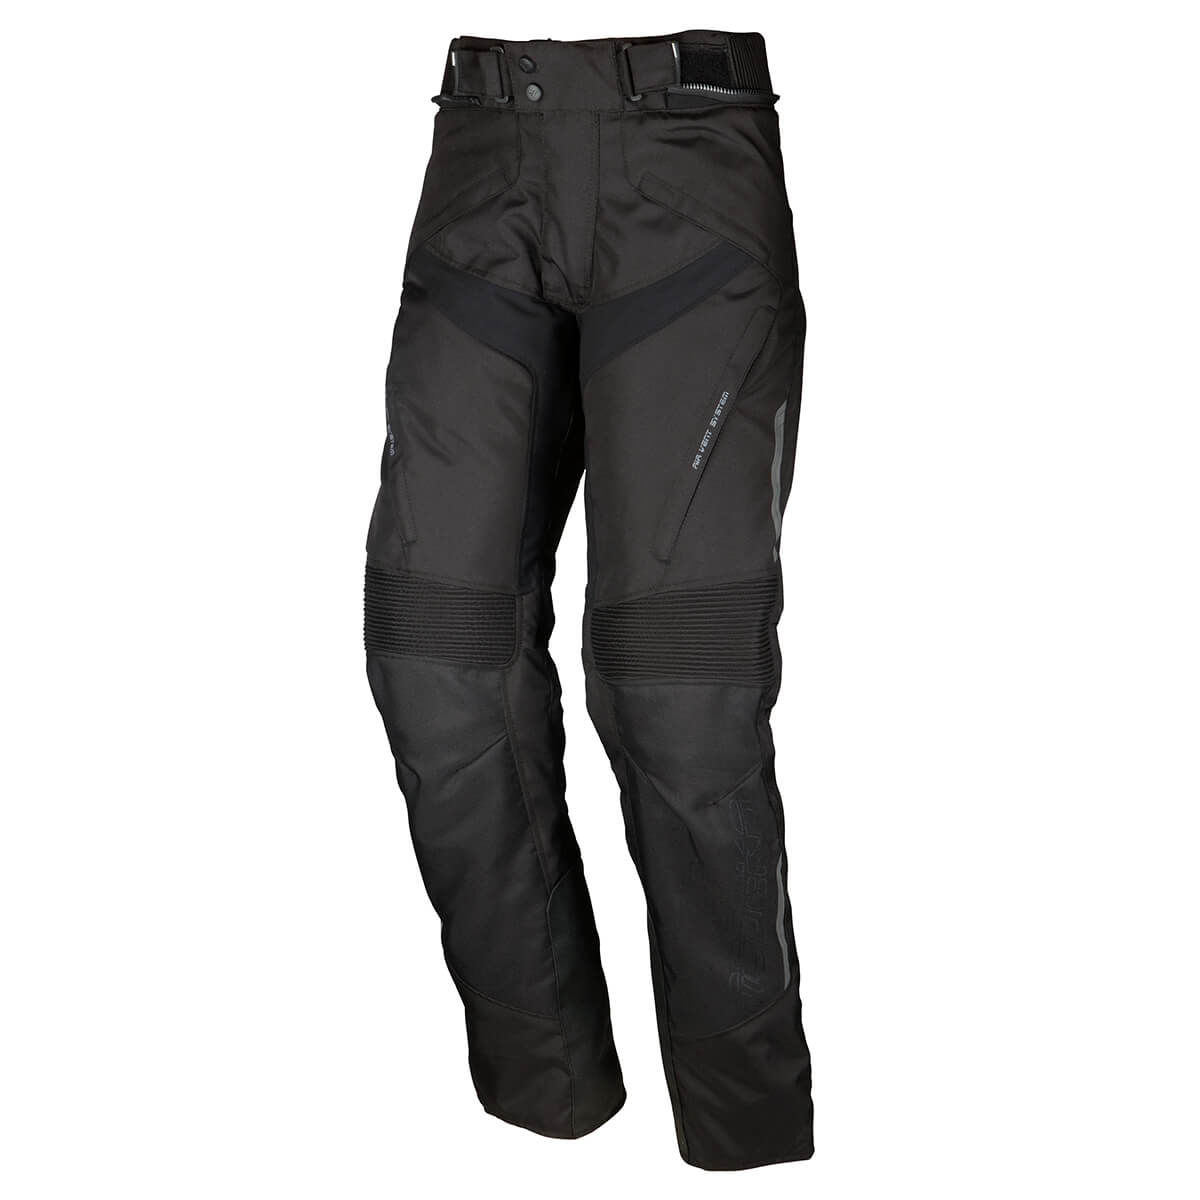 Image of Modeka Clonic Trousers Black Size S ID 4045765163061